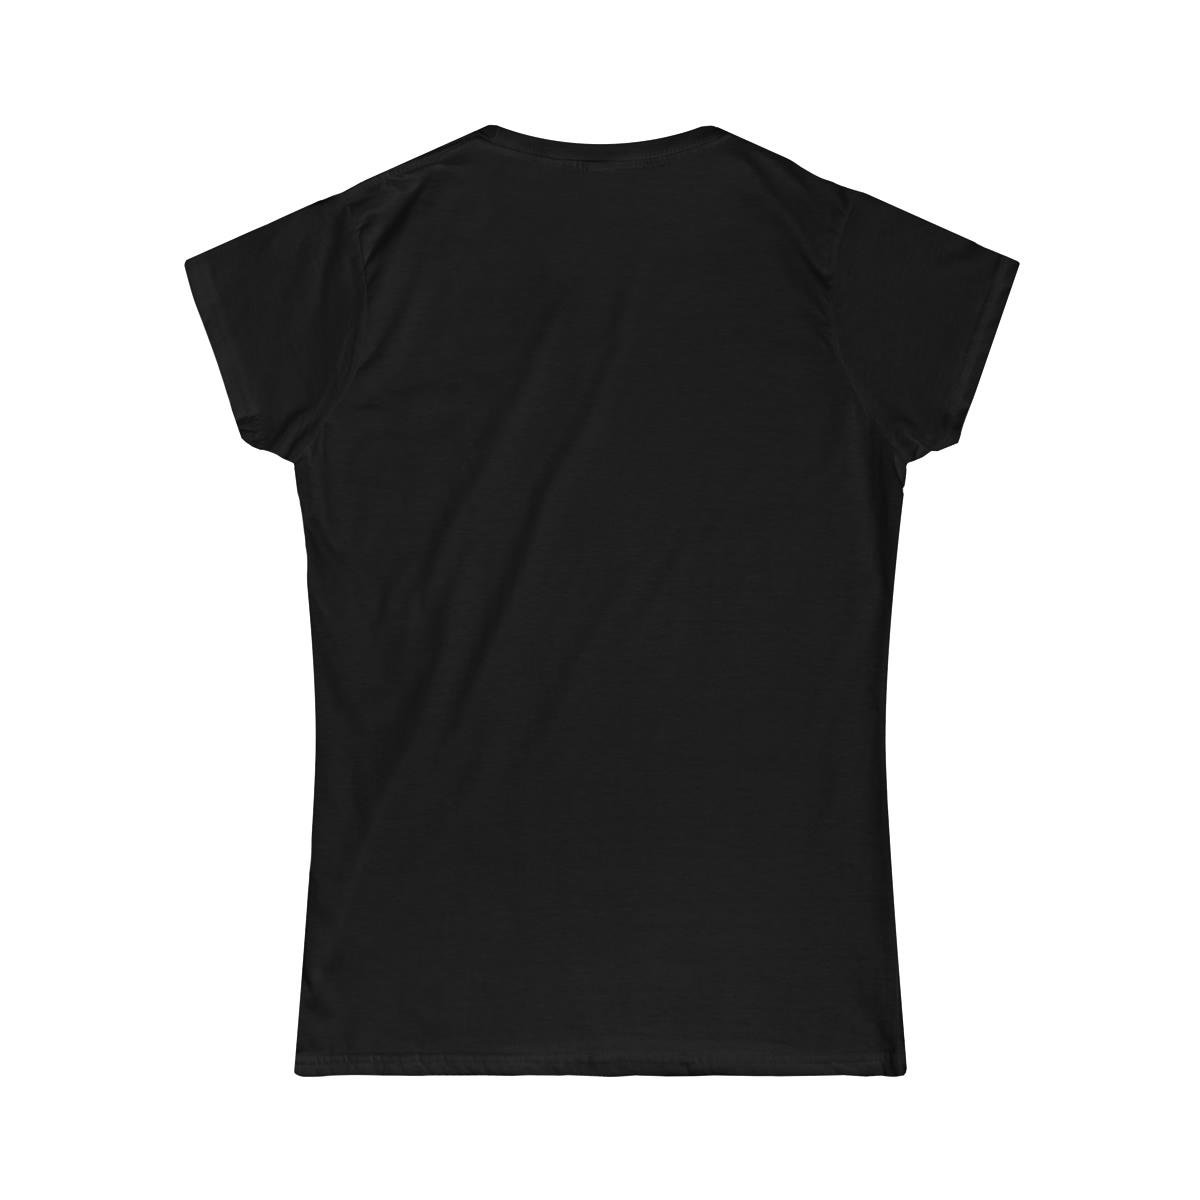 Ignescent – Exodus Women’s Short Sleeve Tshirt